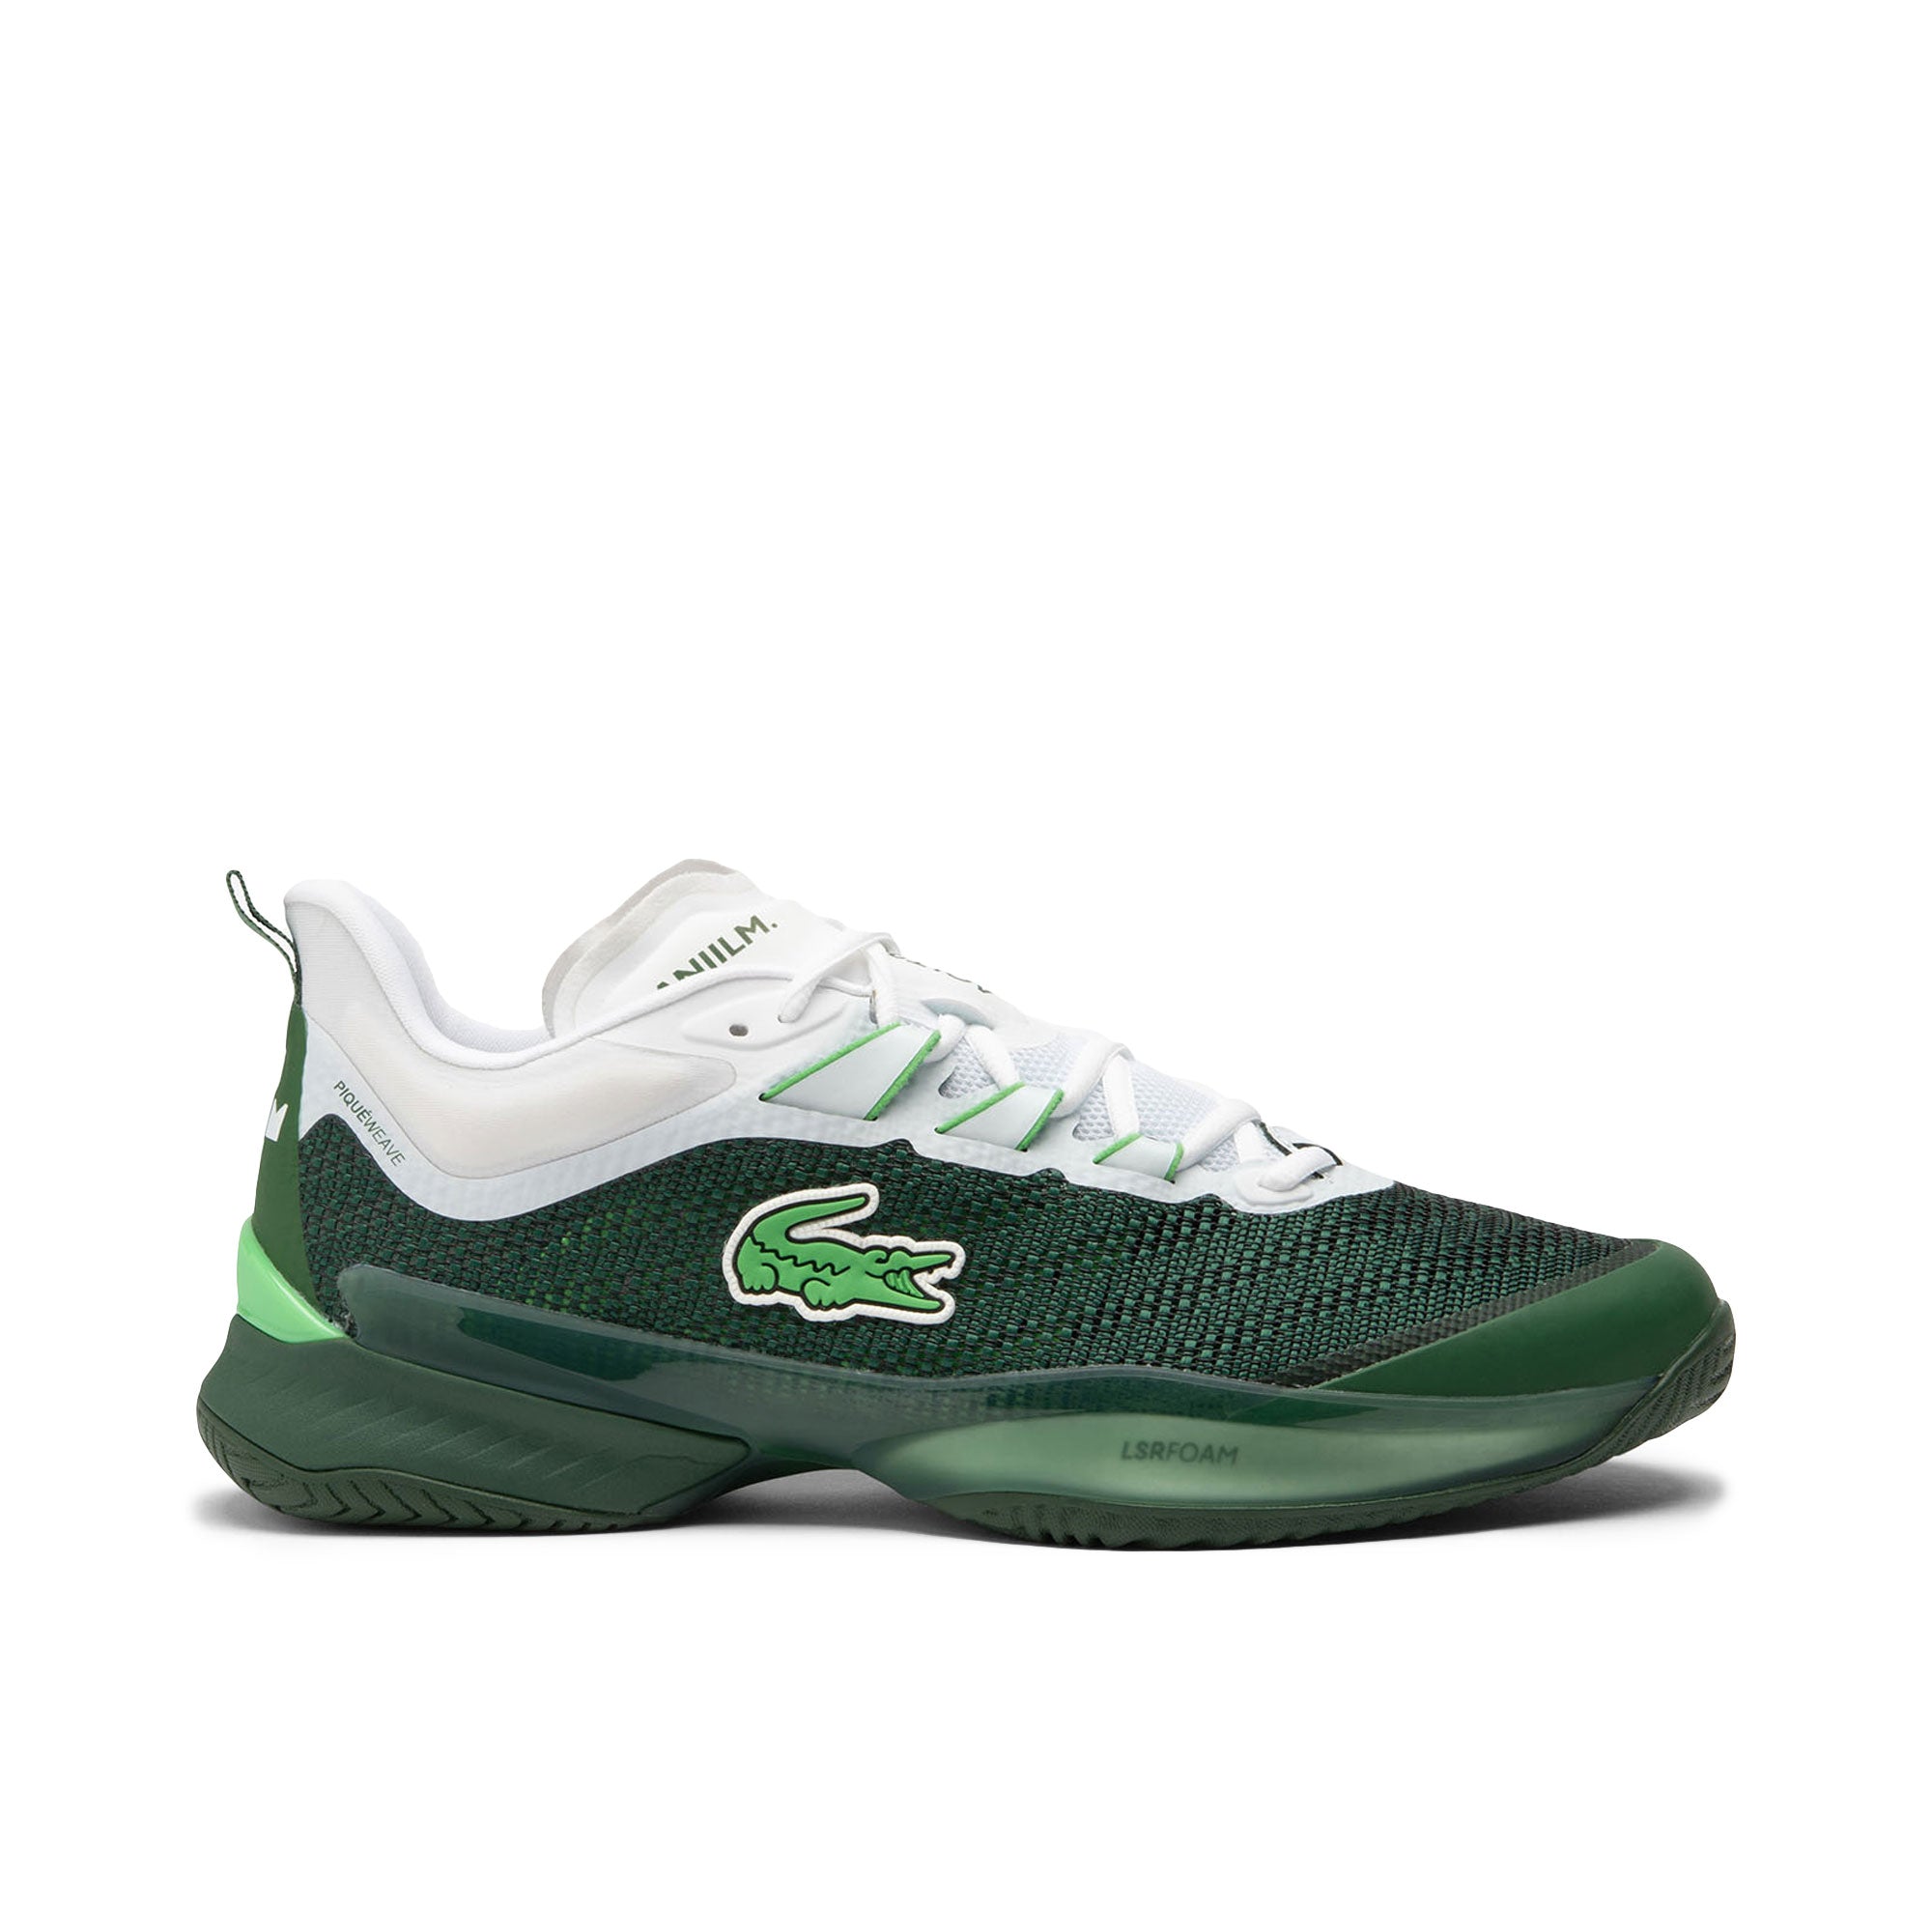 Chaussures de tennis Lacoste x Daniil Medvedev AG-LT23 Ultra (Hommes) - Vert foncé/Blanc